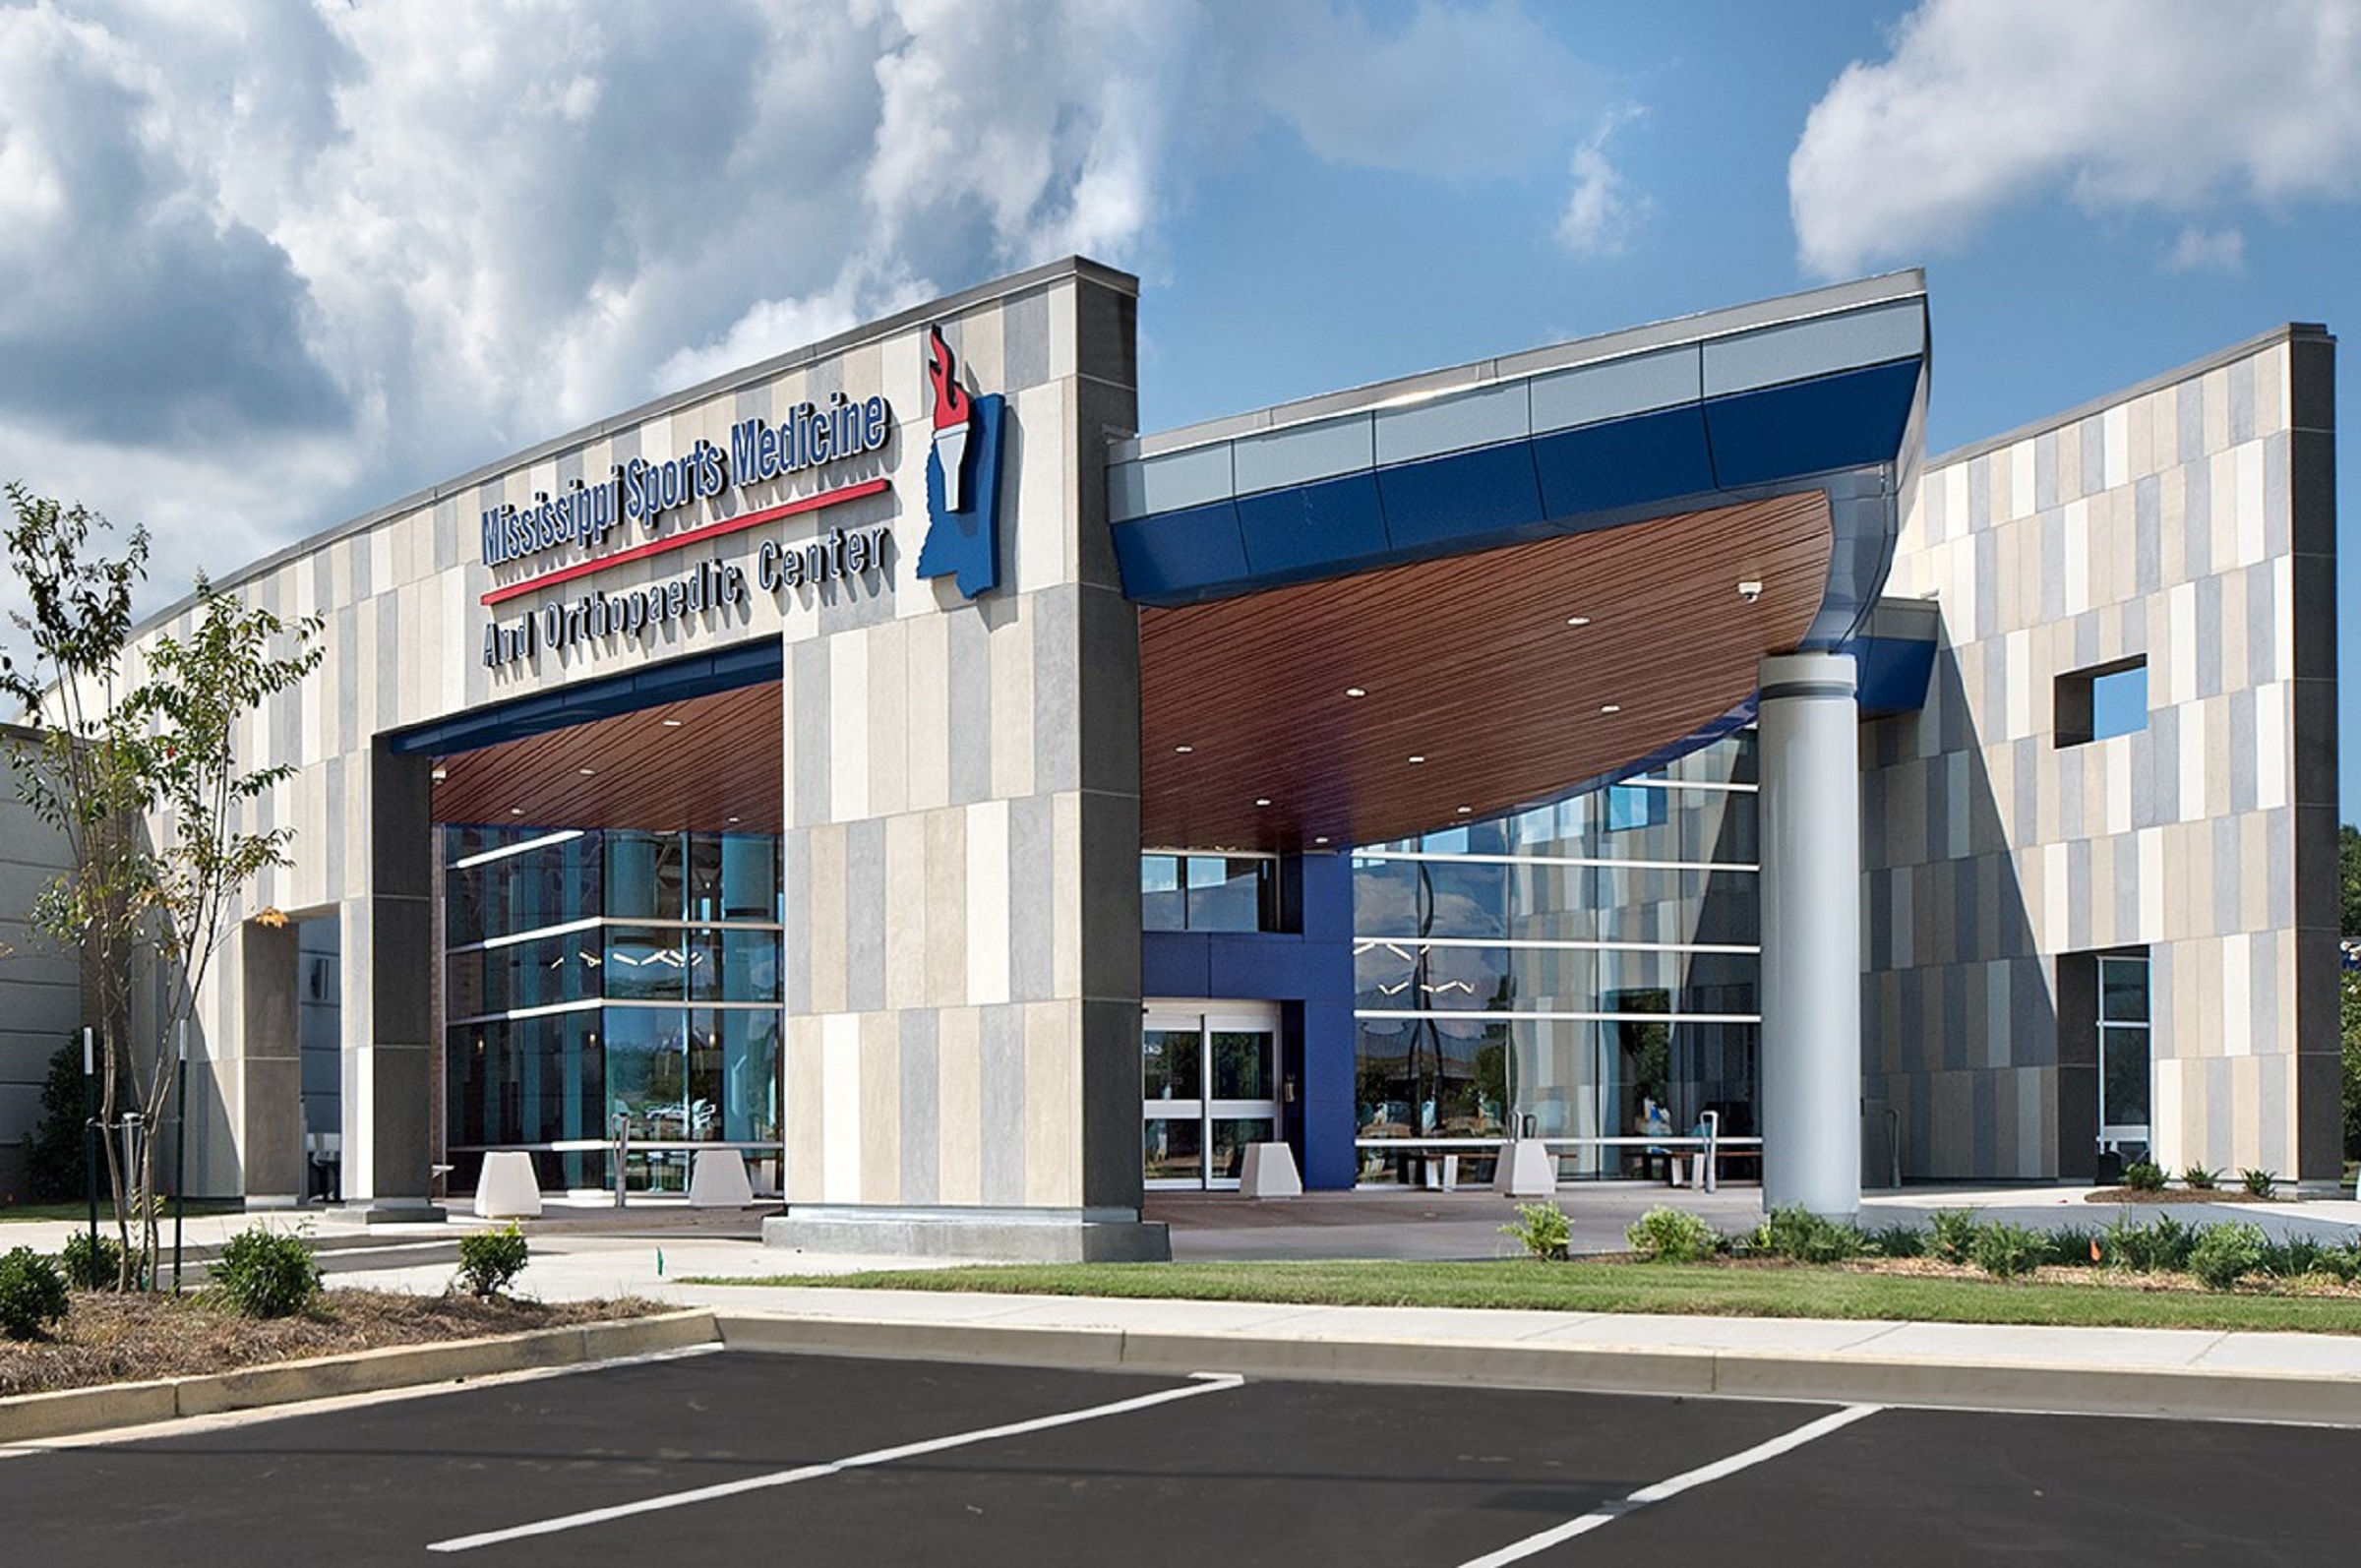 Mississippi Sports Medicine and Orthopedic Center